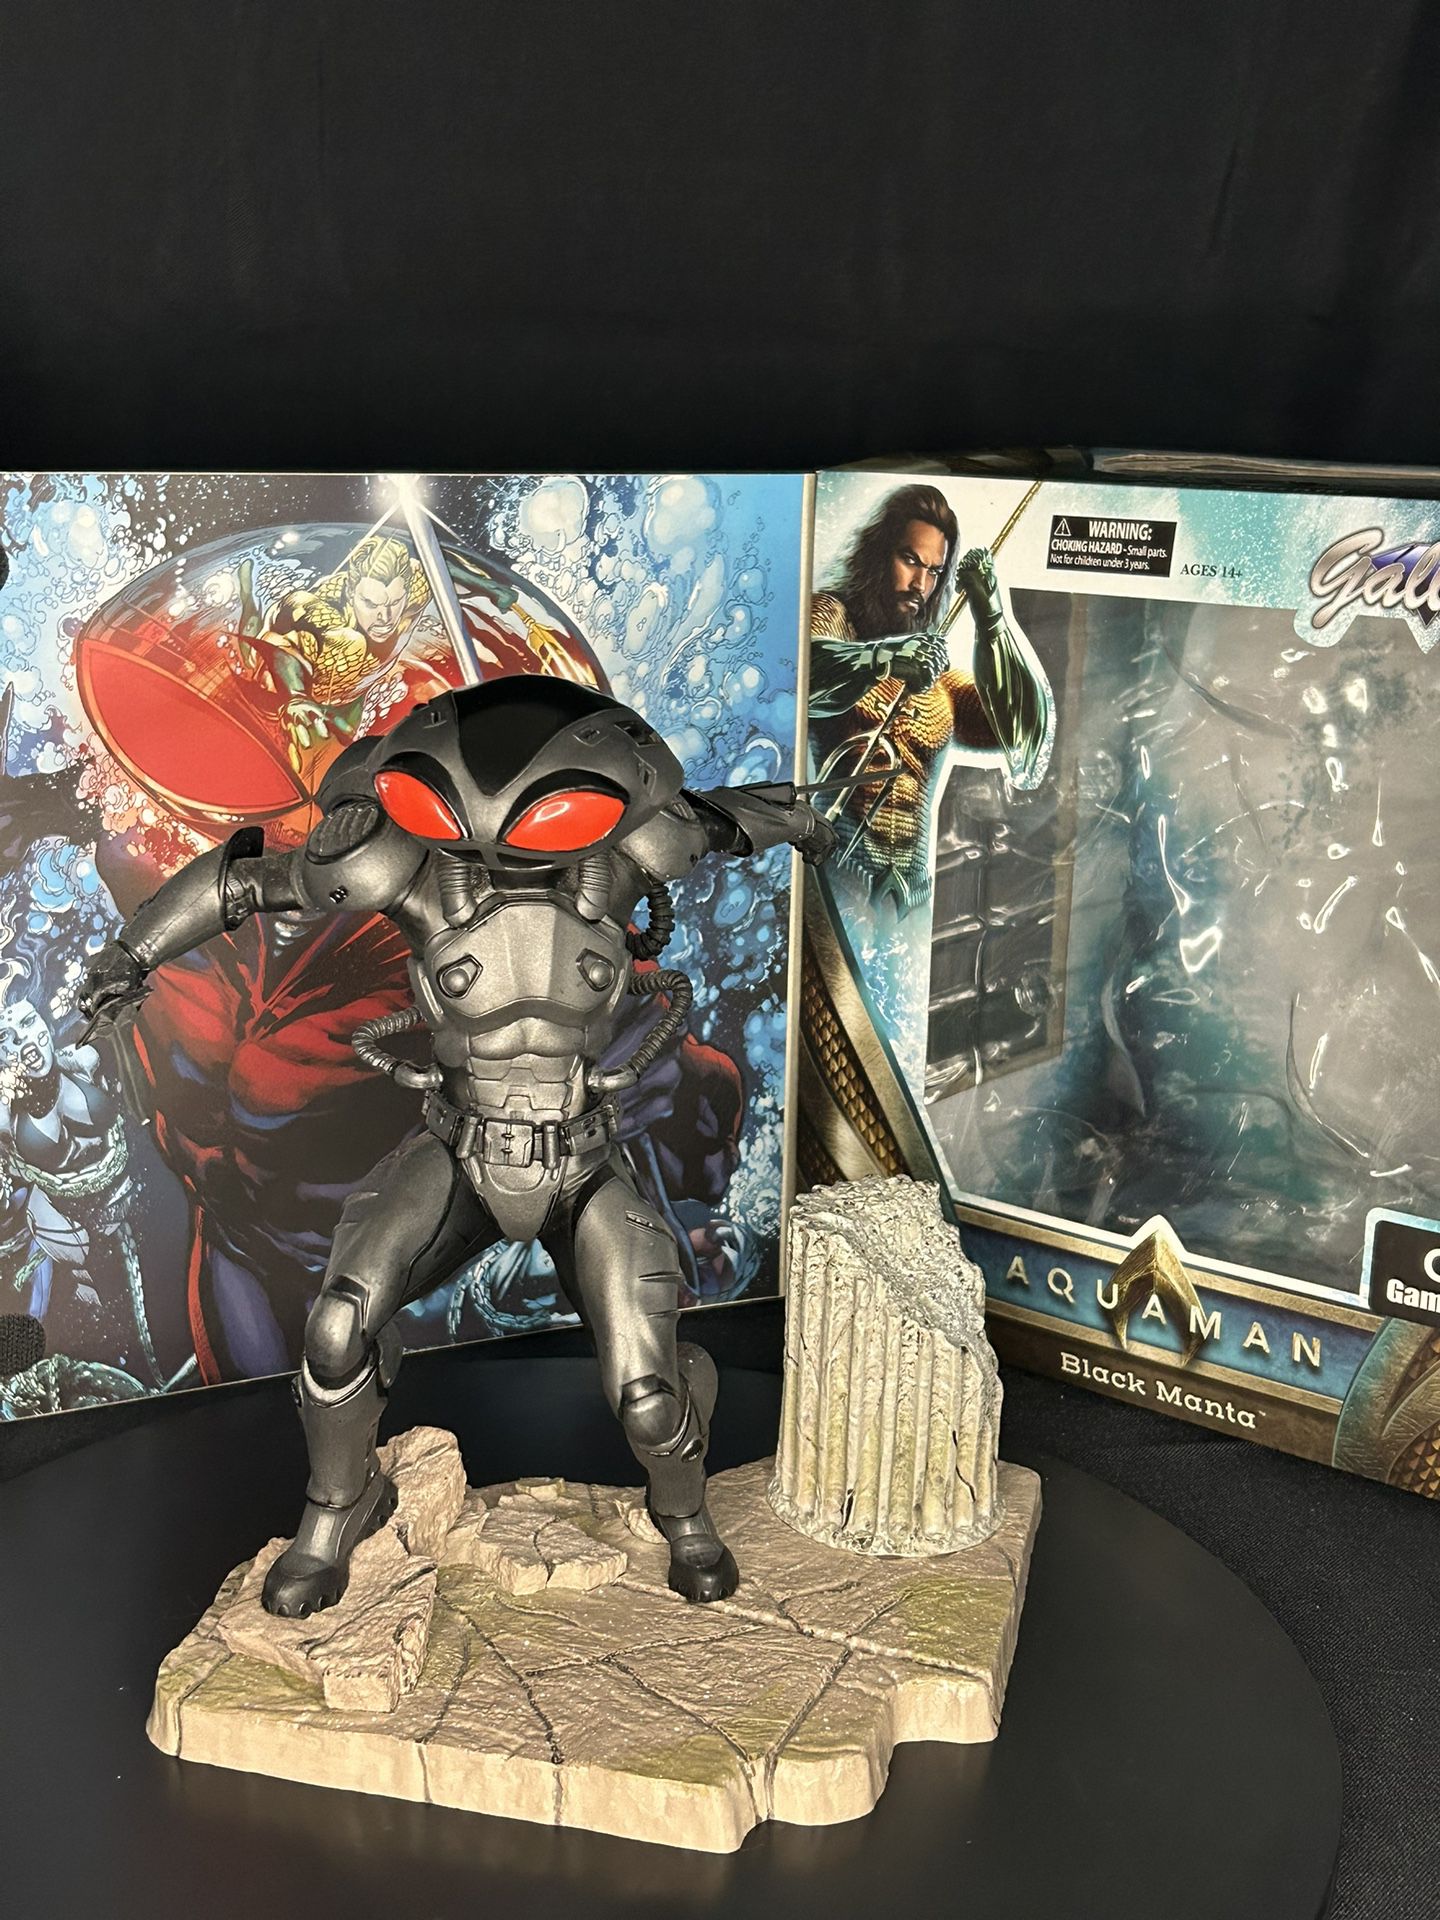 Diamond Select Aquaman Movie Black Manta Statue